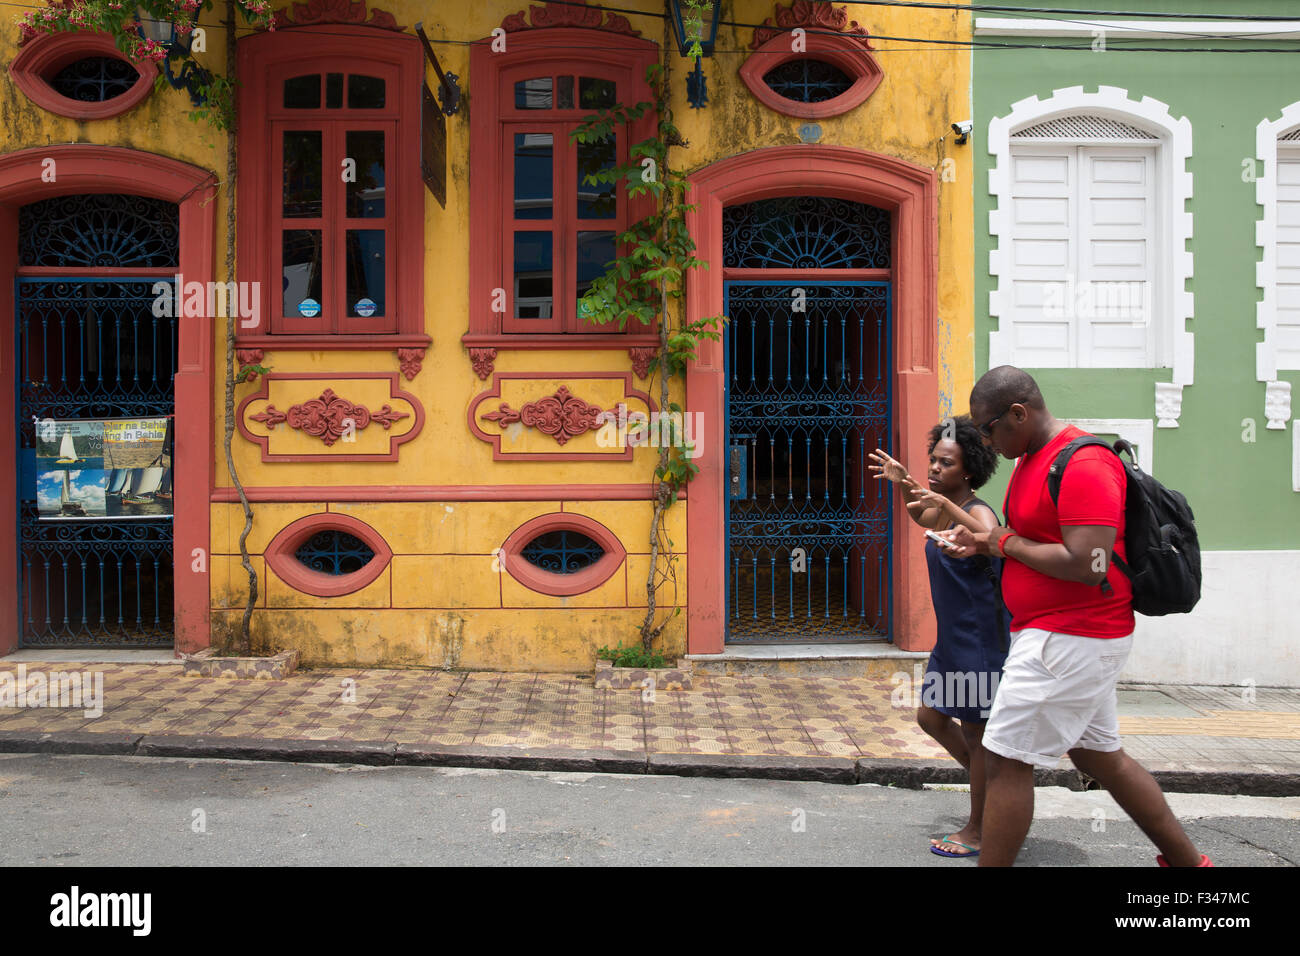 Leben auf der Straße, die Altstadt, Salvador da Bahia, Brasilien Stockfoto